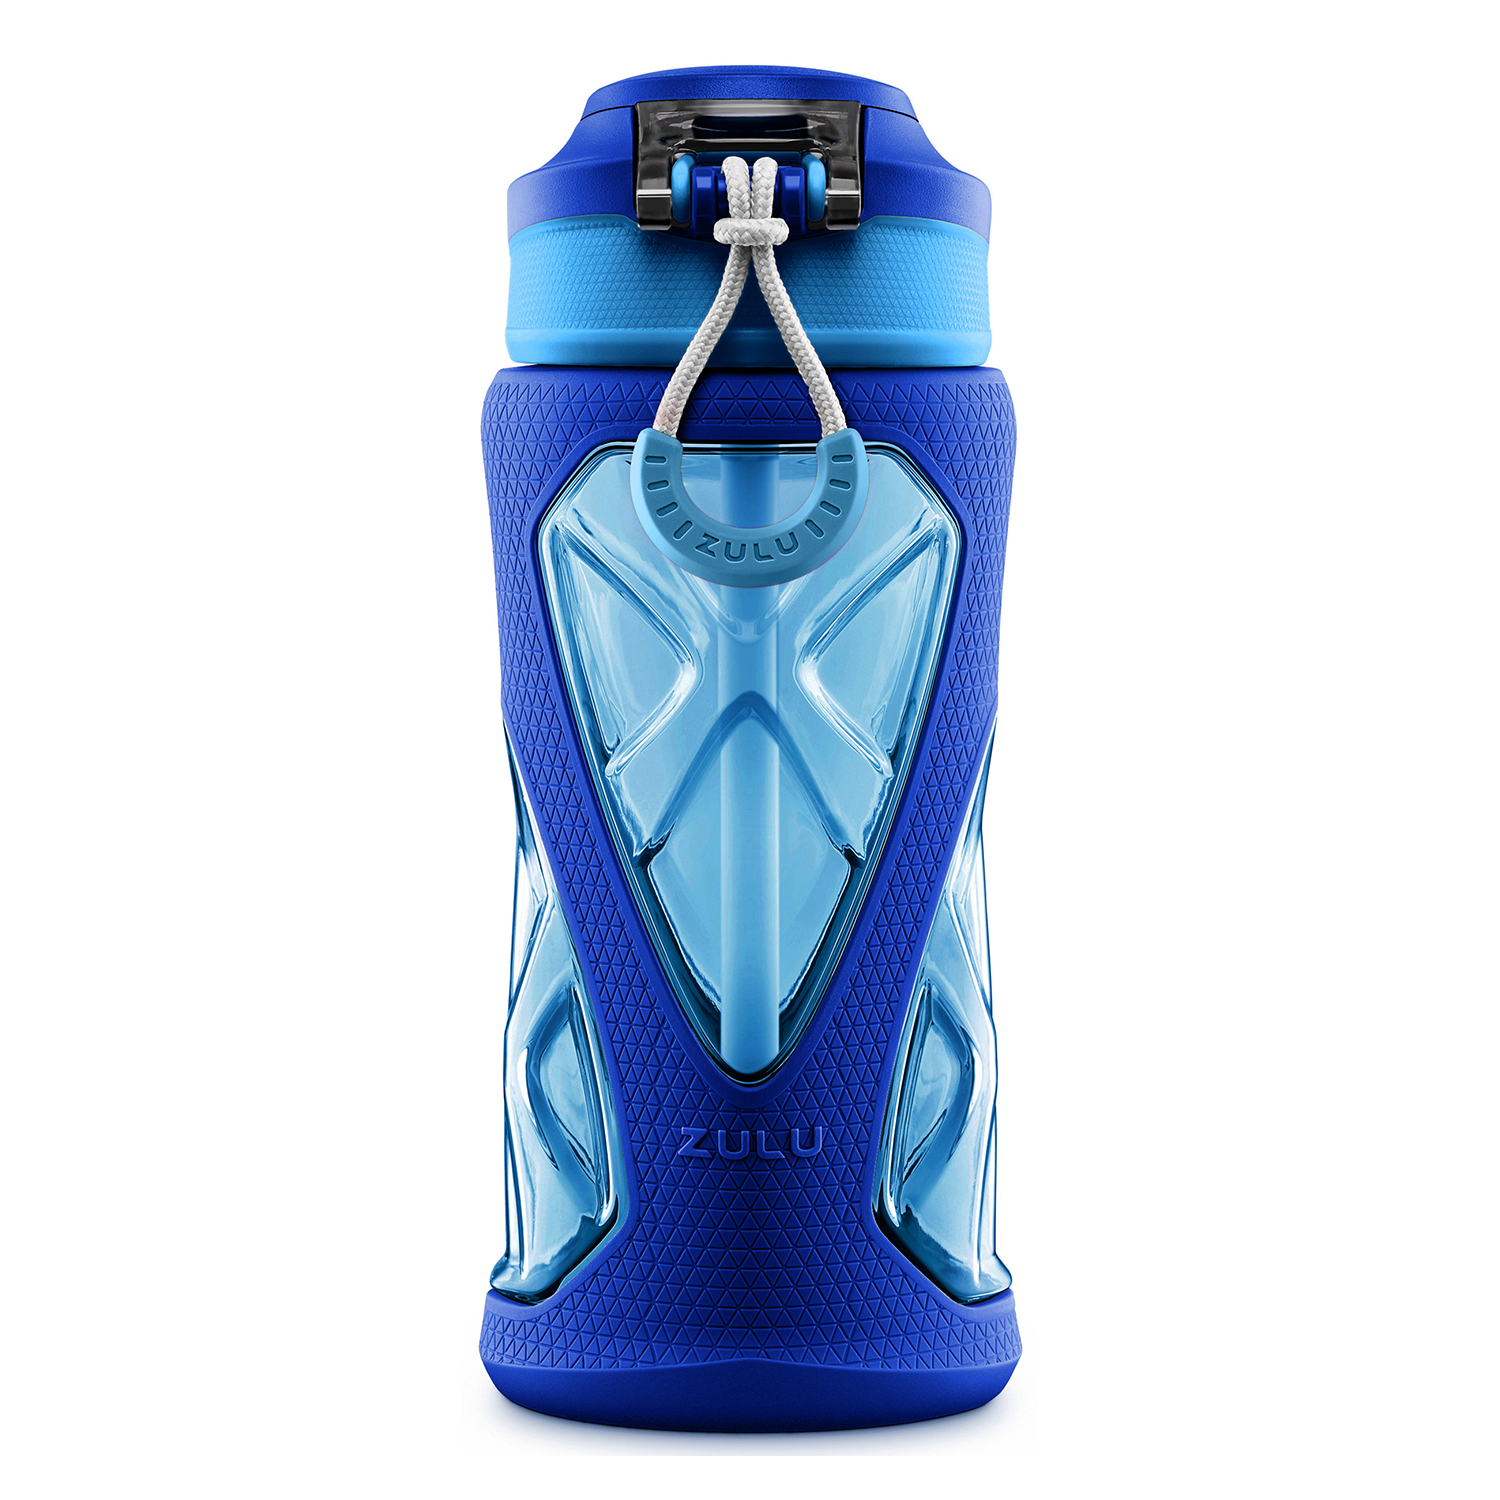 Zulu Torque 16oz Tritan Water Bottle, 2-pack only $6.97 Shipped at